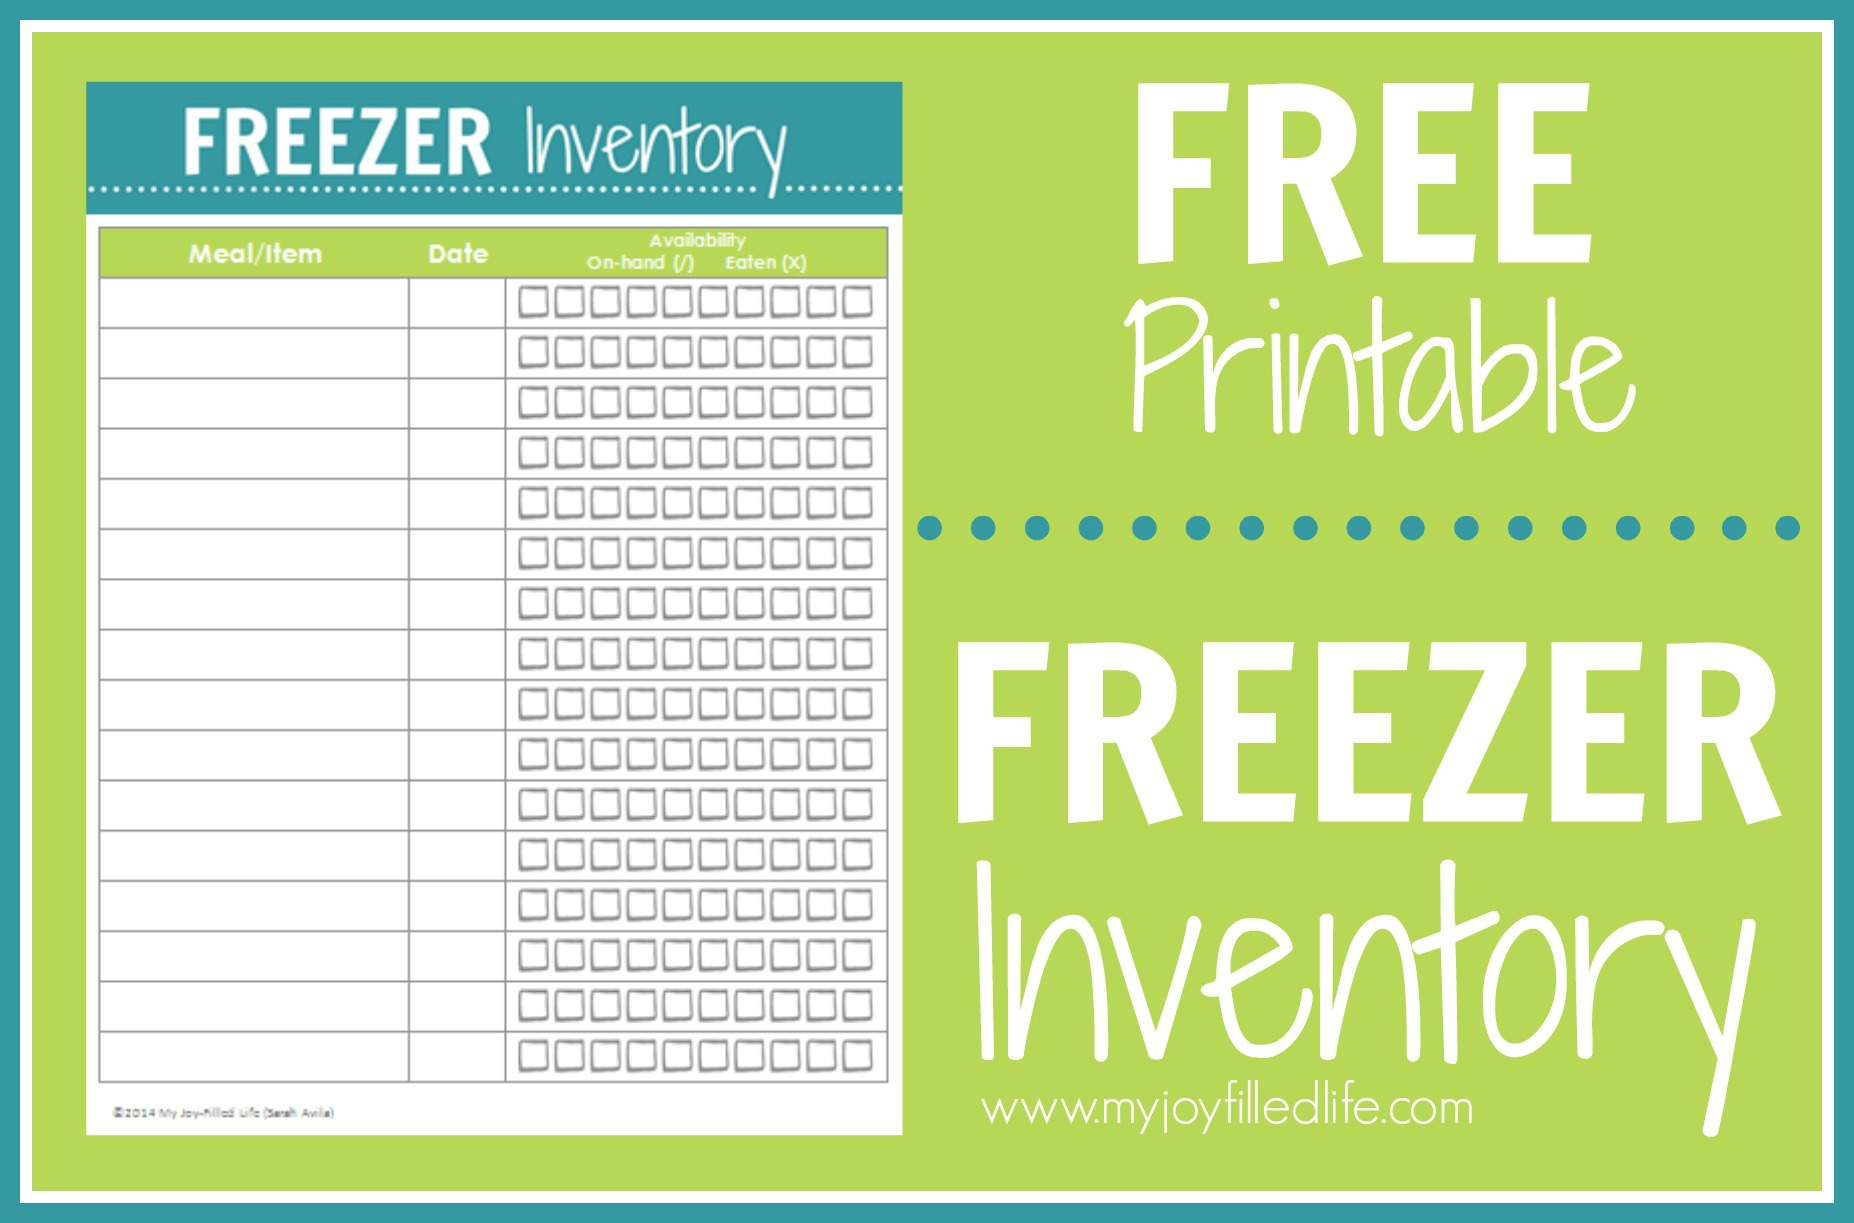 Postpartum Freezer Meals & FREE Freezer Inventory Printable My Joy